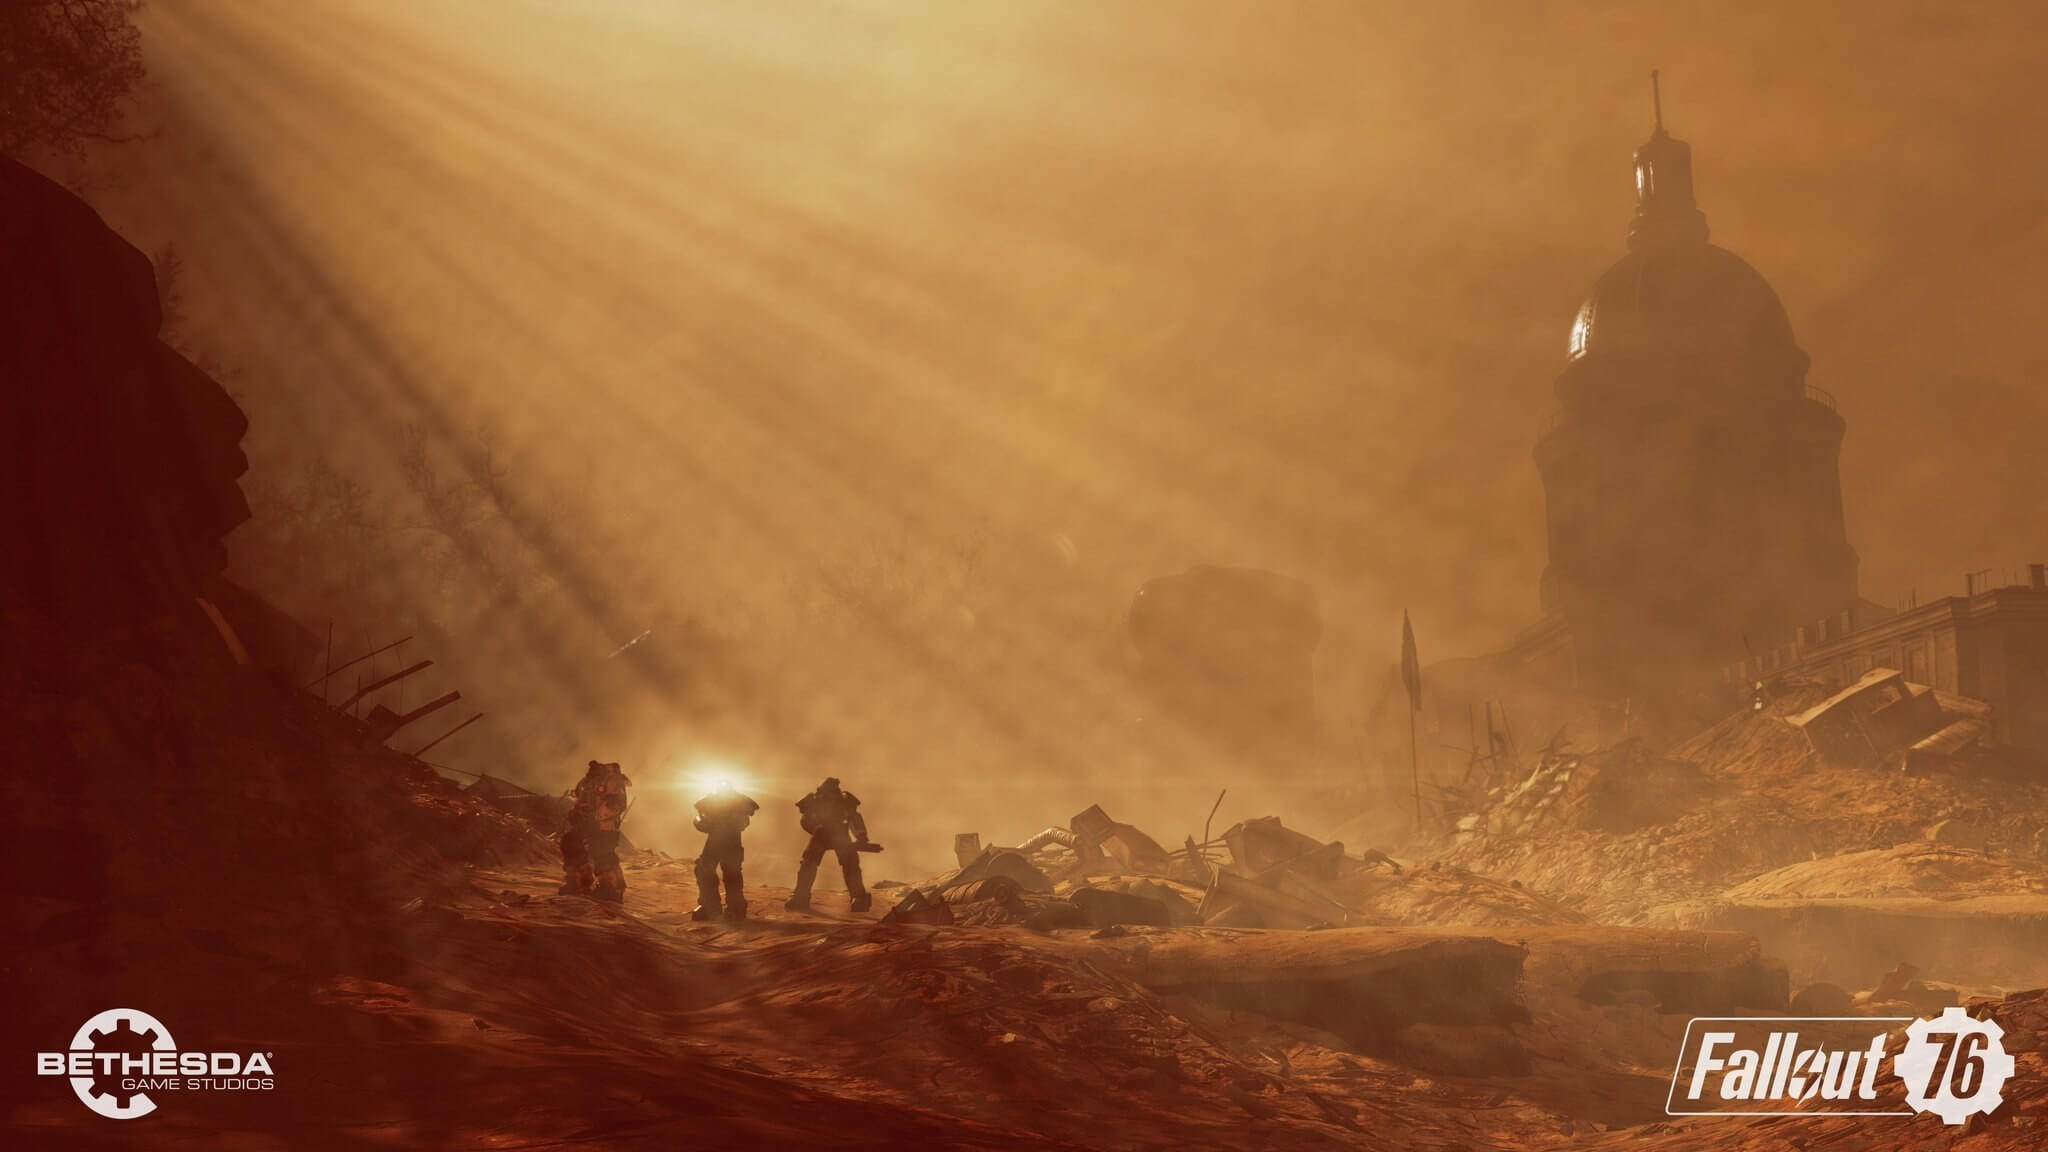 'The Nuke Loop' is Fallout 76's endgame, lead designer explains